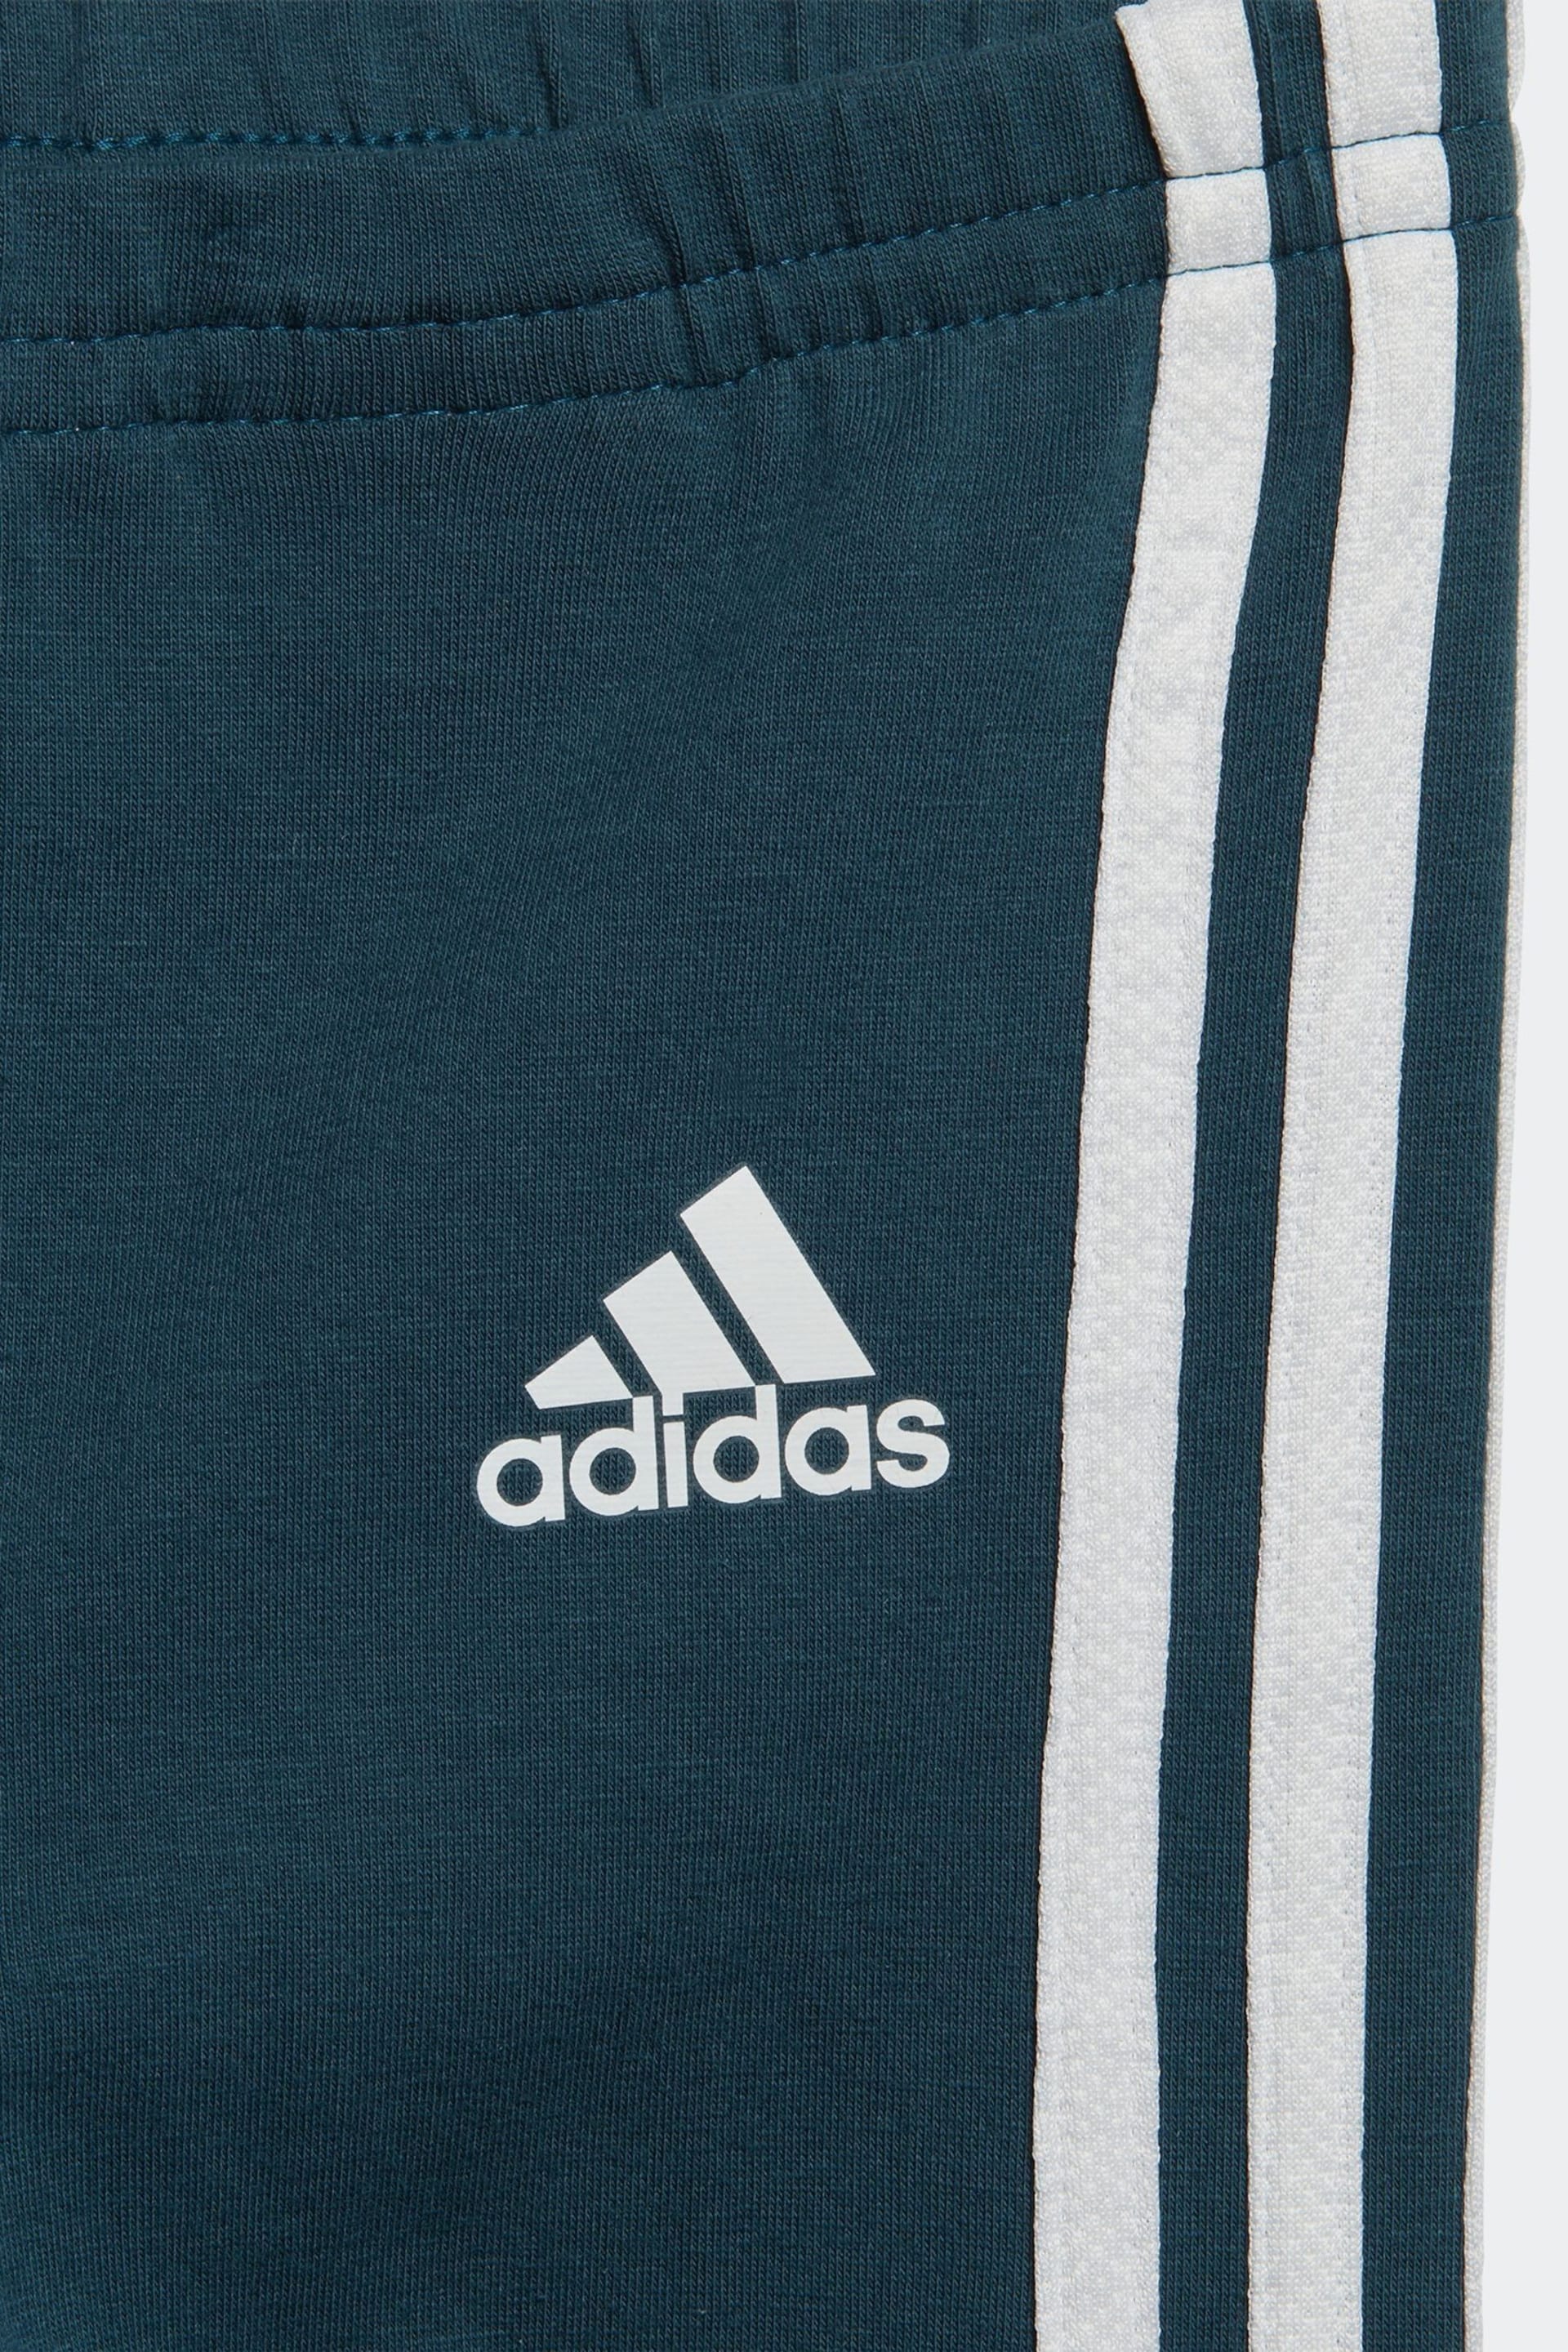 adidas Blue Kids Sportswear Tiberio 3-Stripes Colourblock Tracksuit Set - Image 4 of 4